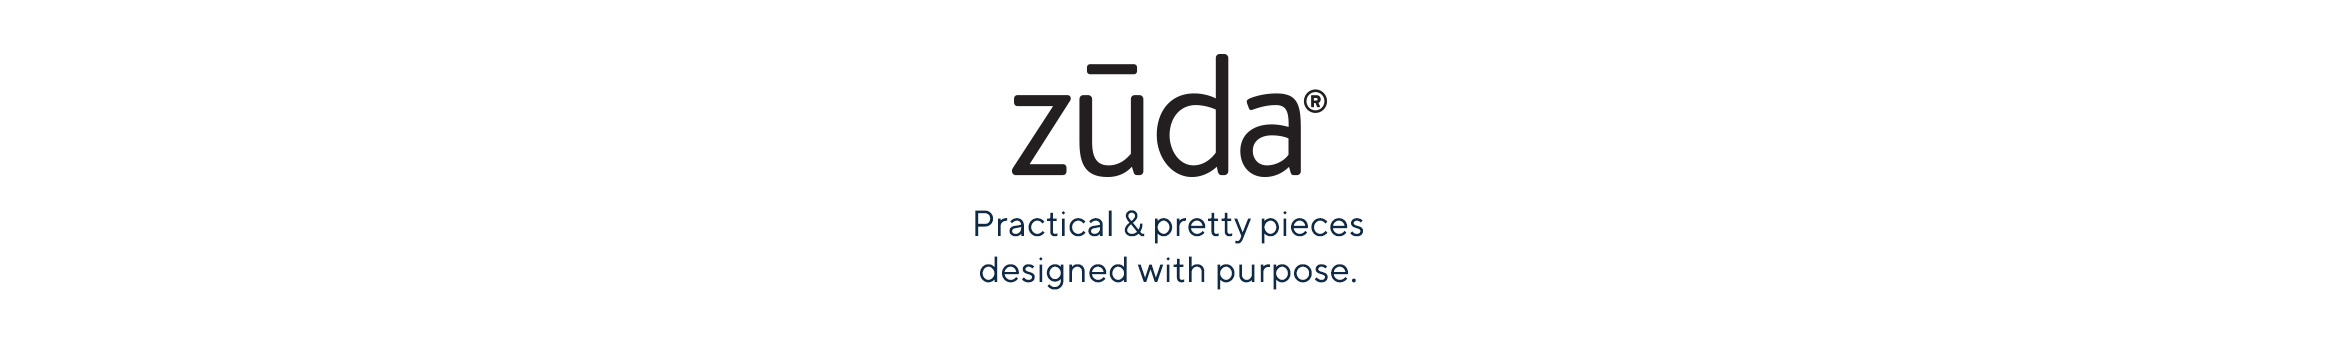 zuda. Practical & pretty pieces designed with purpose.